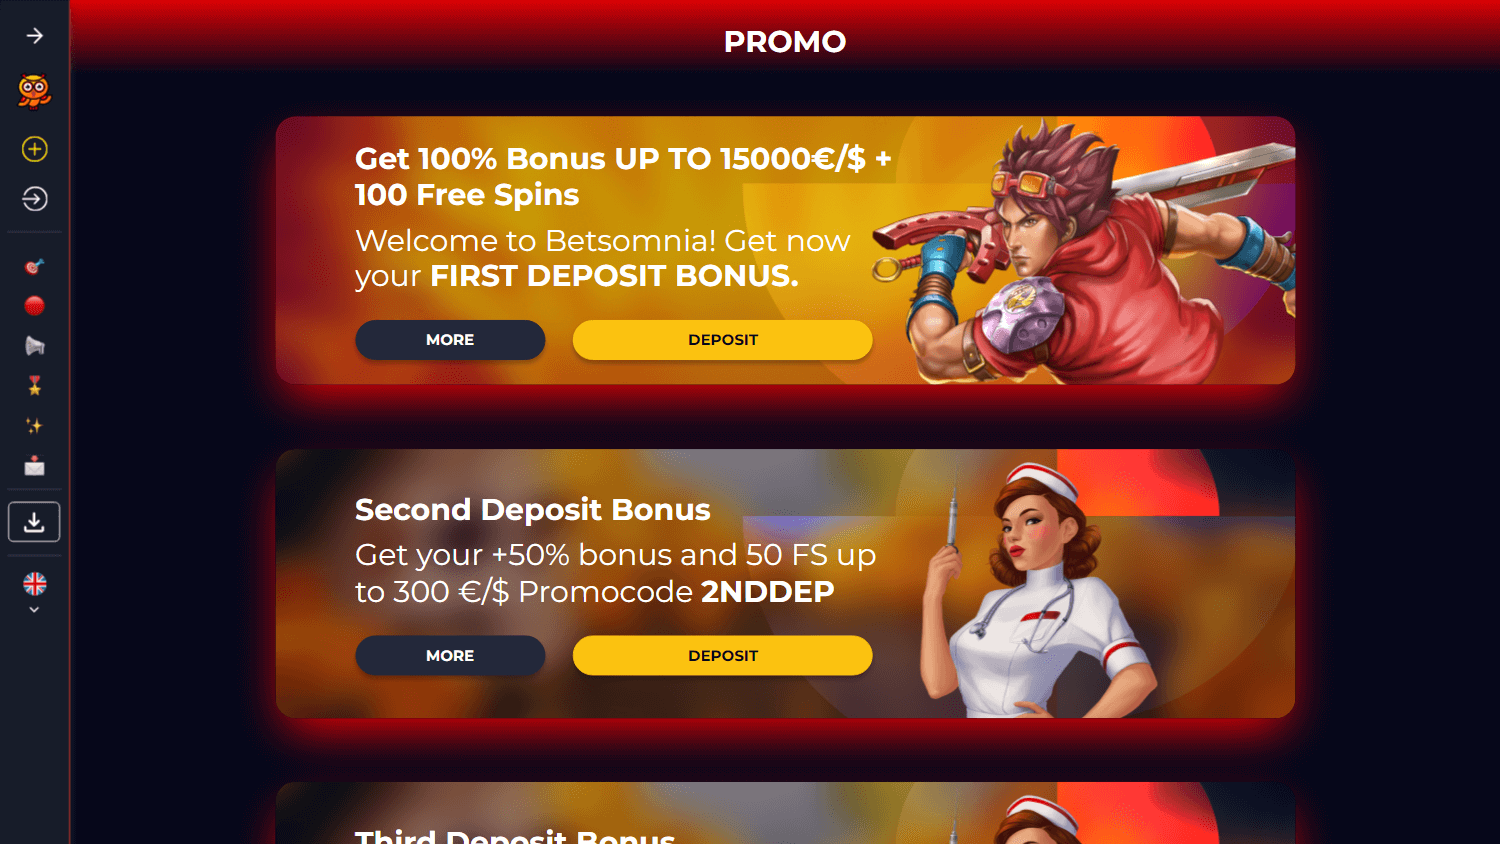 betsomnia_casino_promotions_desktop